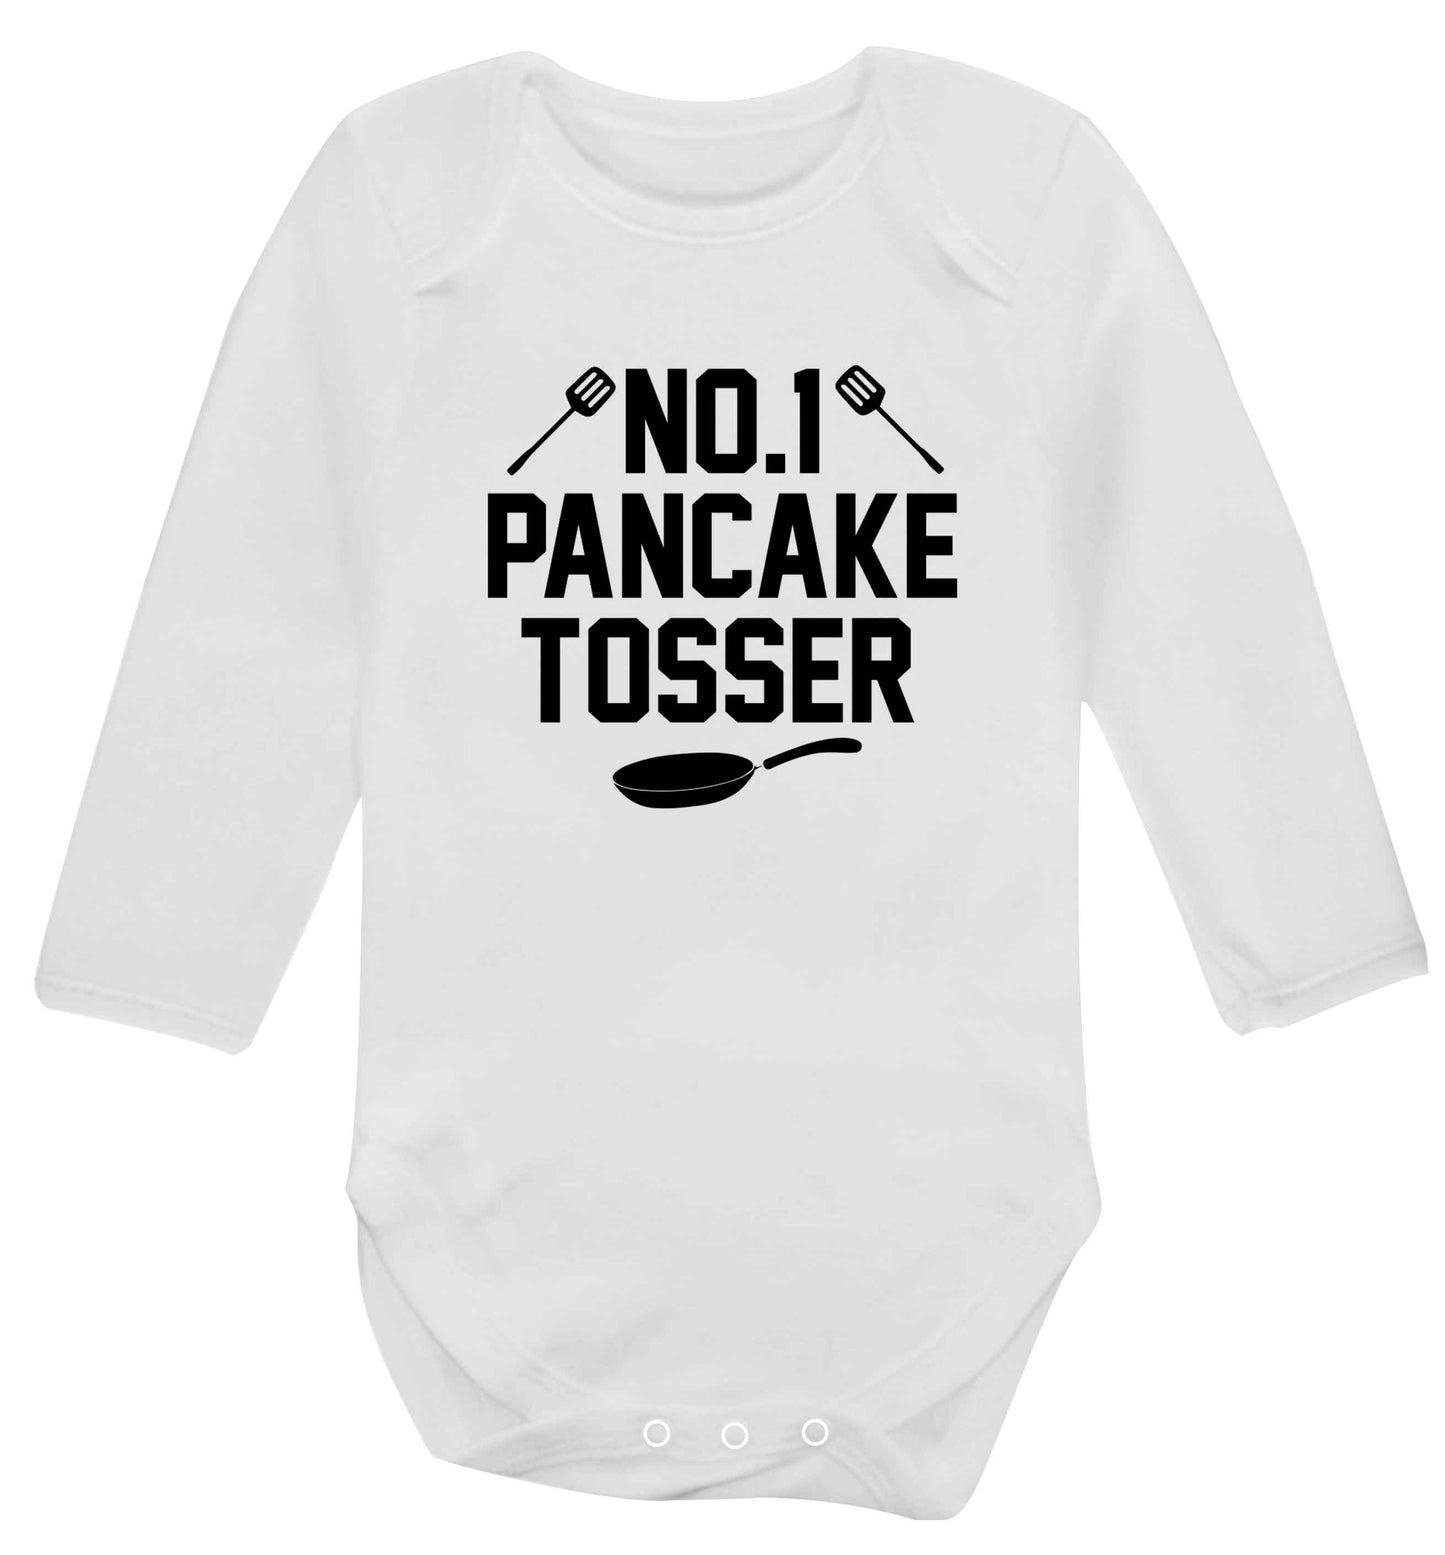 No.1 Pancake tosser baby vest long sleeved white 6-12 months